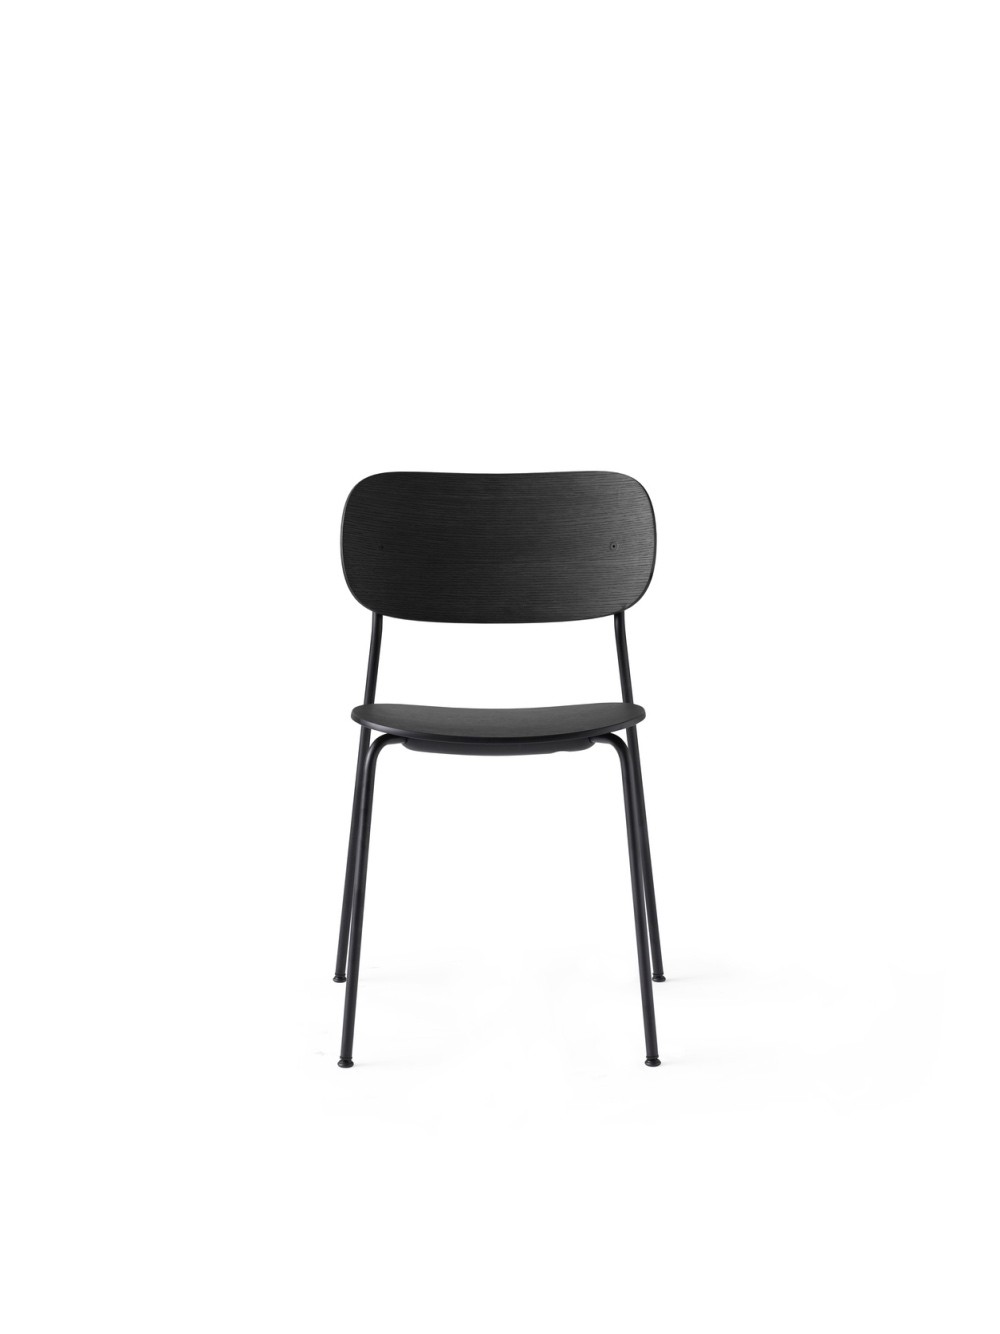 Menu Co Chair Dining Chair Black Steel Base Black Oak Seat and Back Esszimmerstuhl